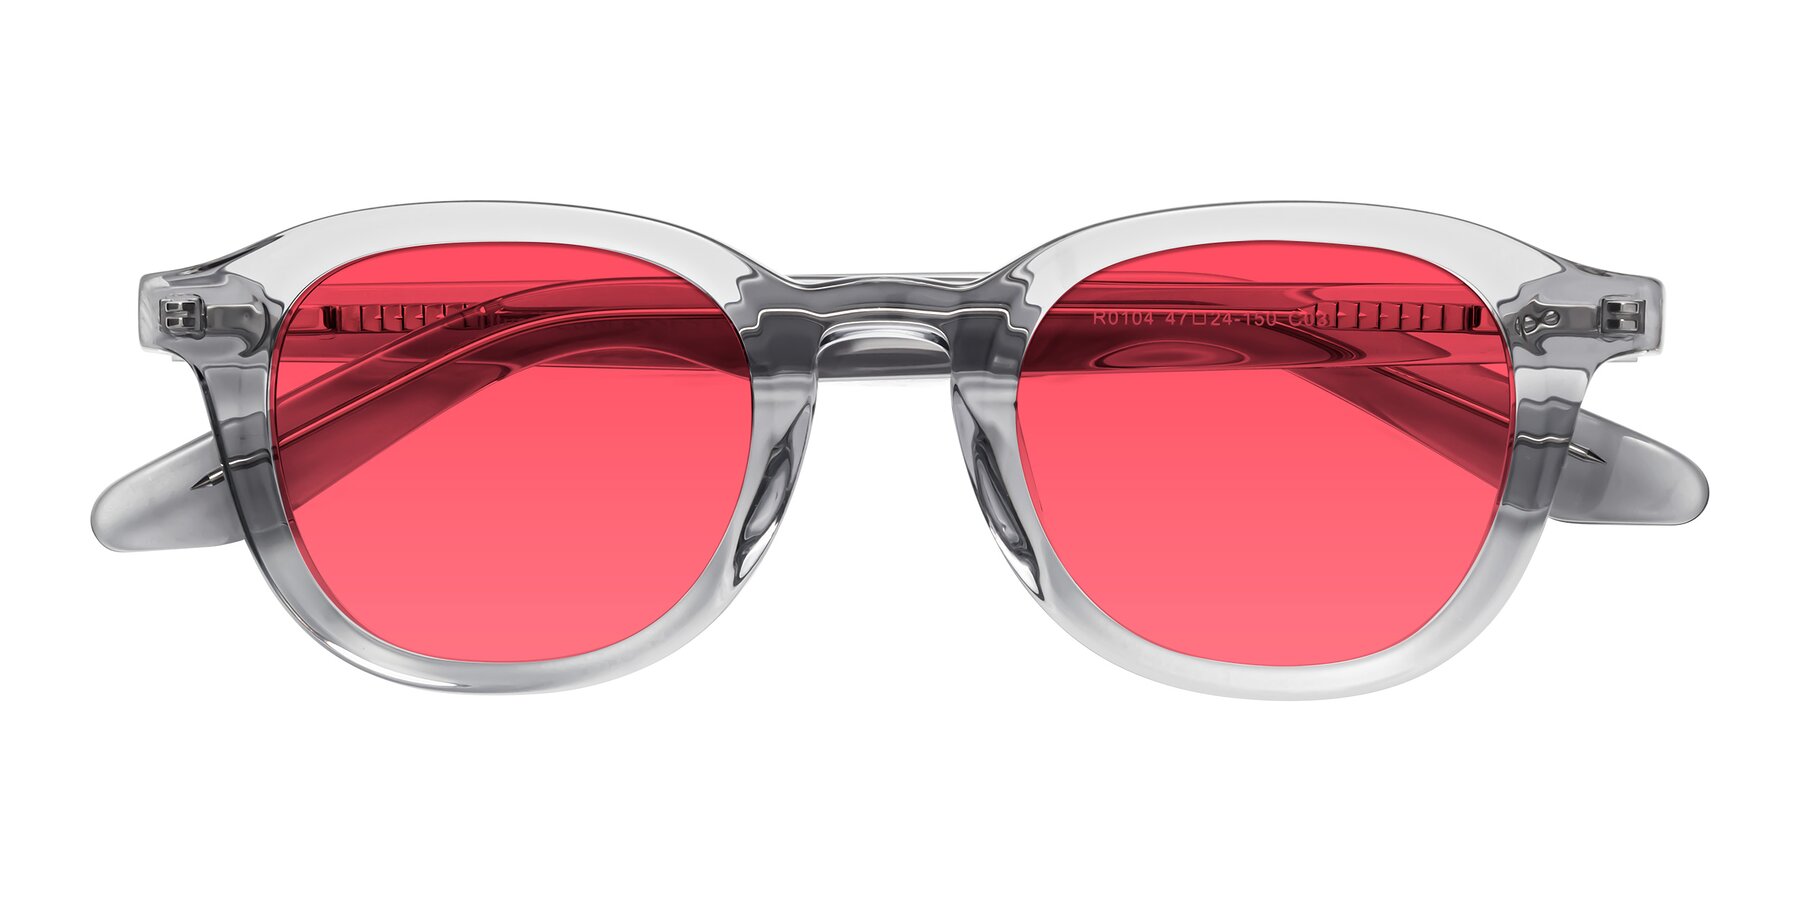 Red shade sunglasses men Cabernet red lens glasses johnny depp black glasses  L | eBay